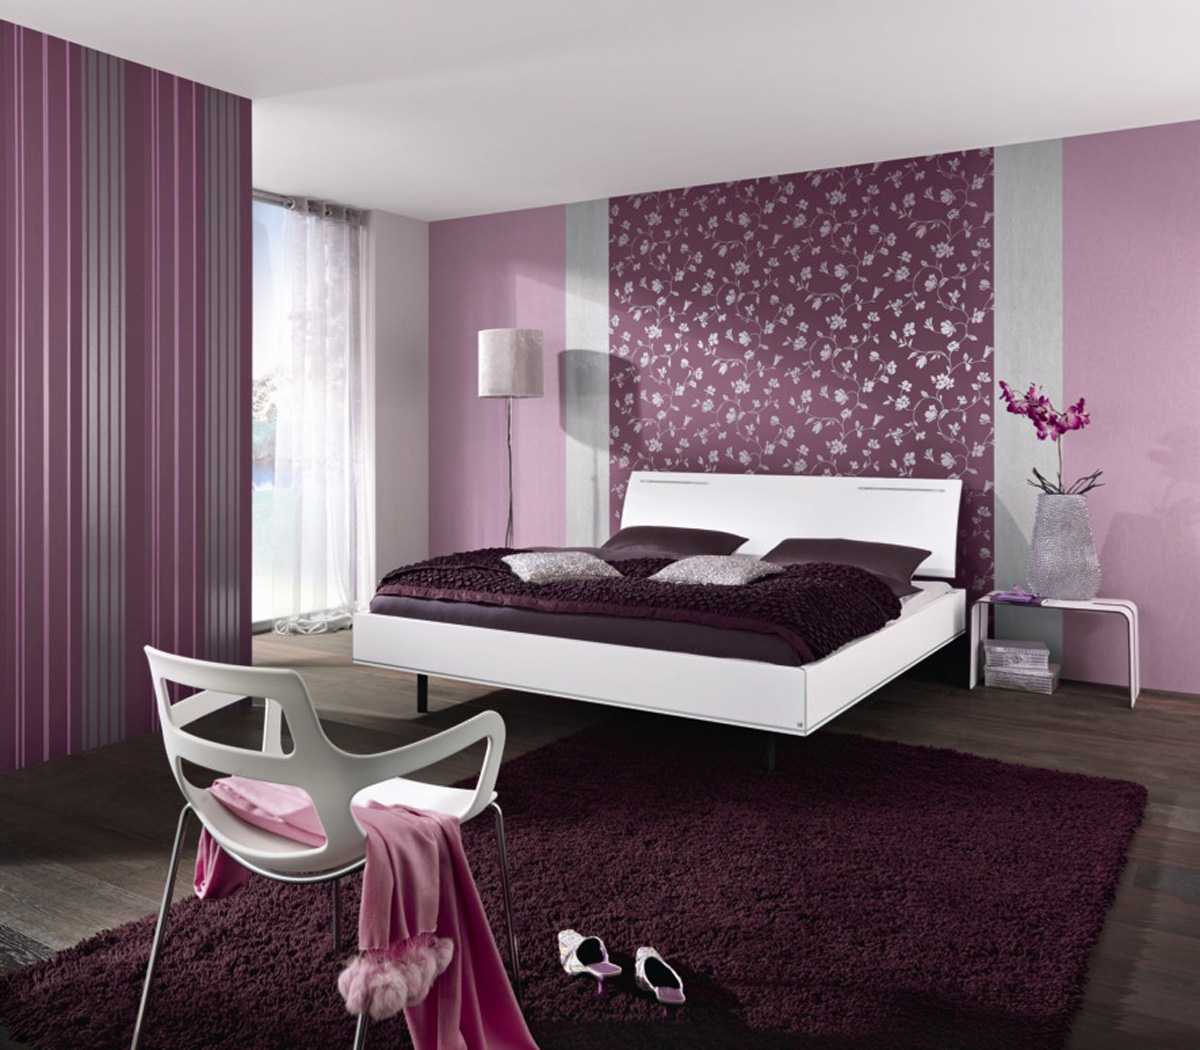 unusual bedroom style in purple